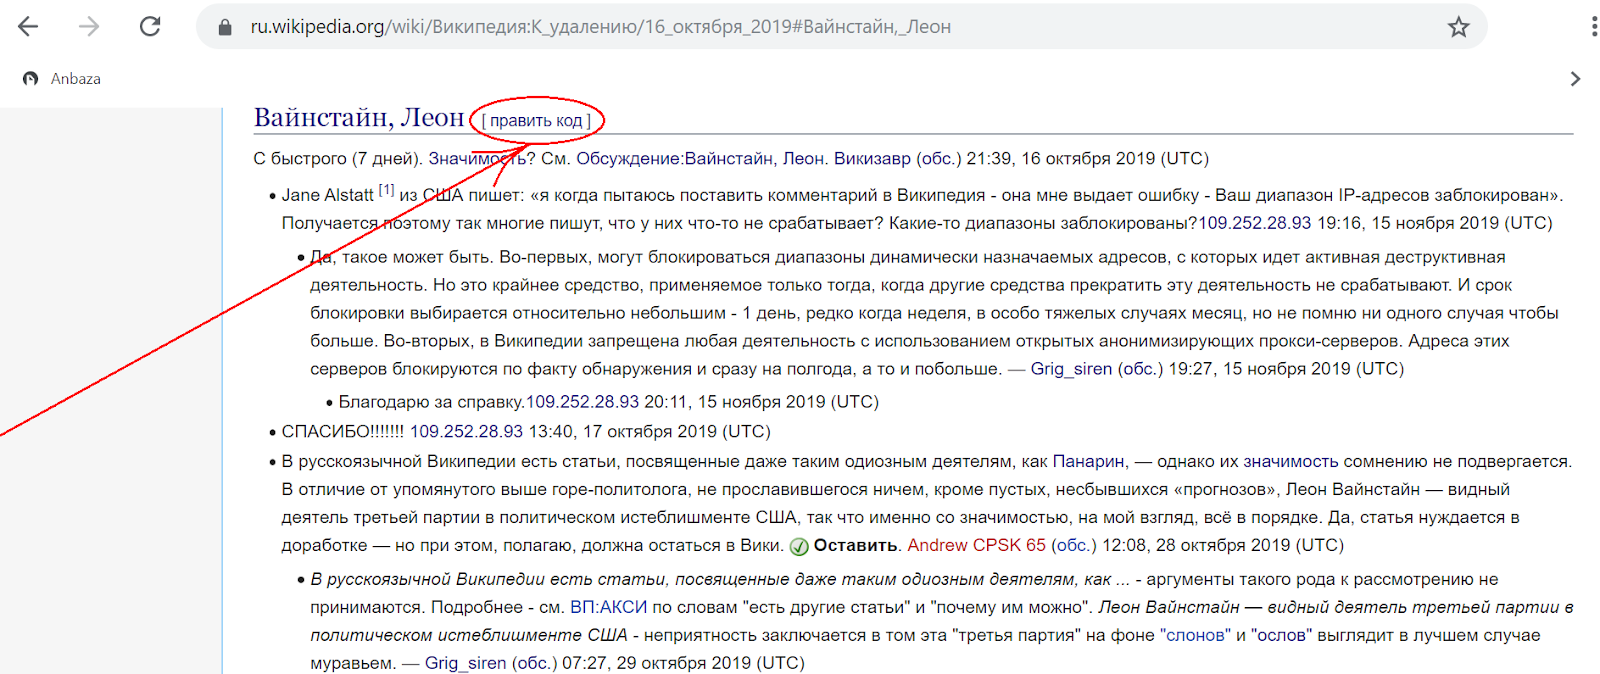 Php https ru wikipedia org. Википедия цвета ссылок. Скриншоты изменений в Википедии. Wiki org.